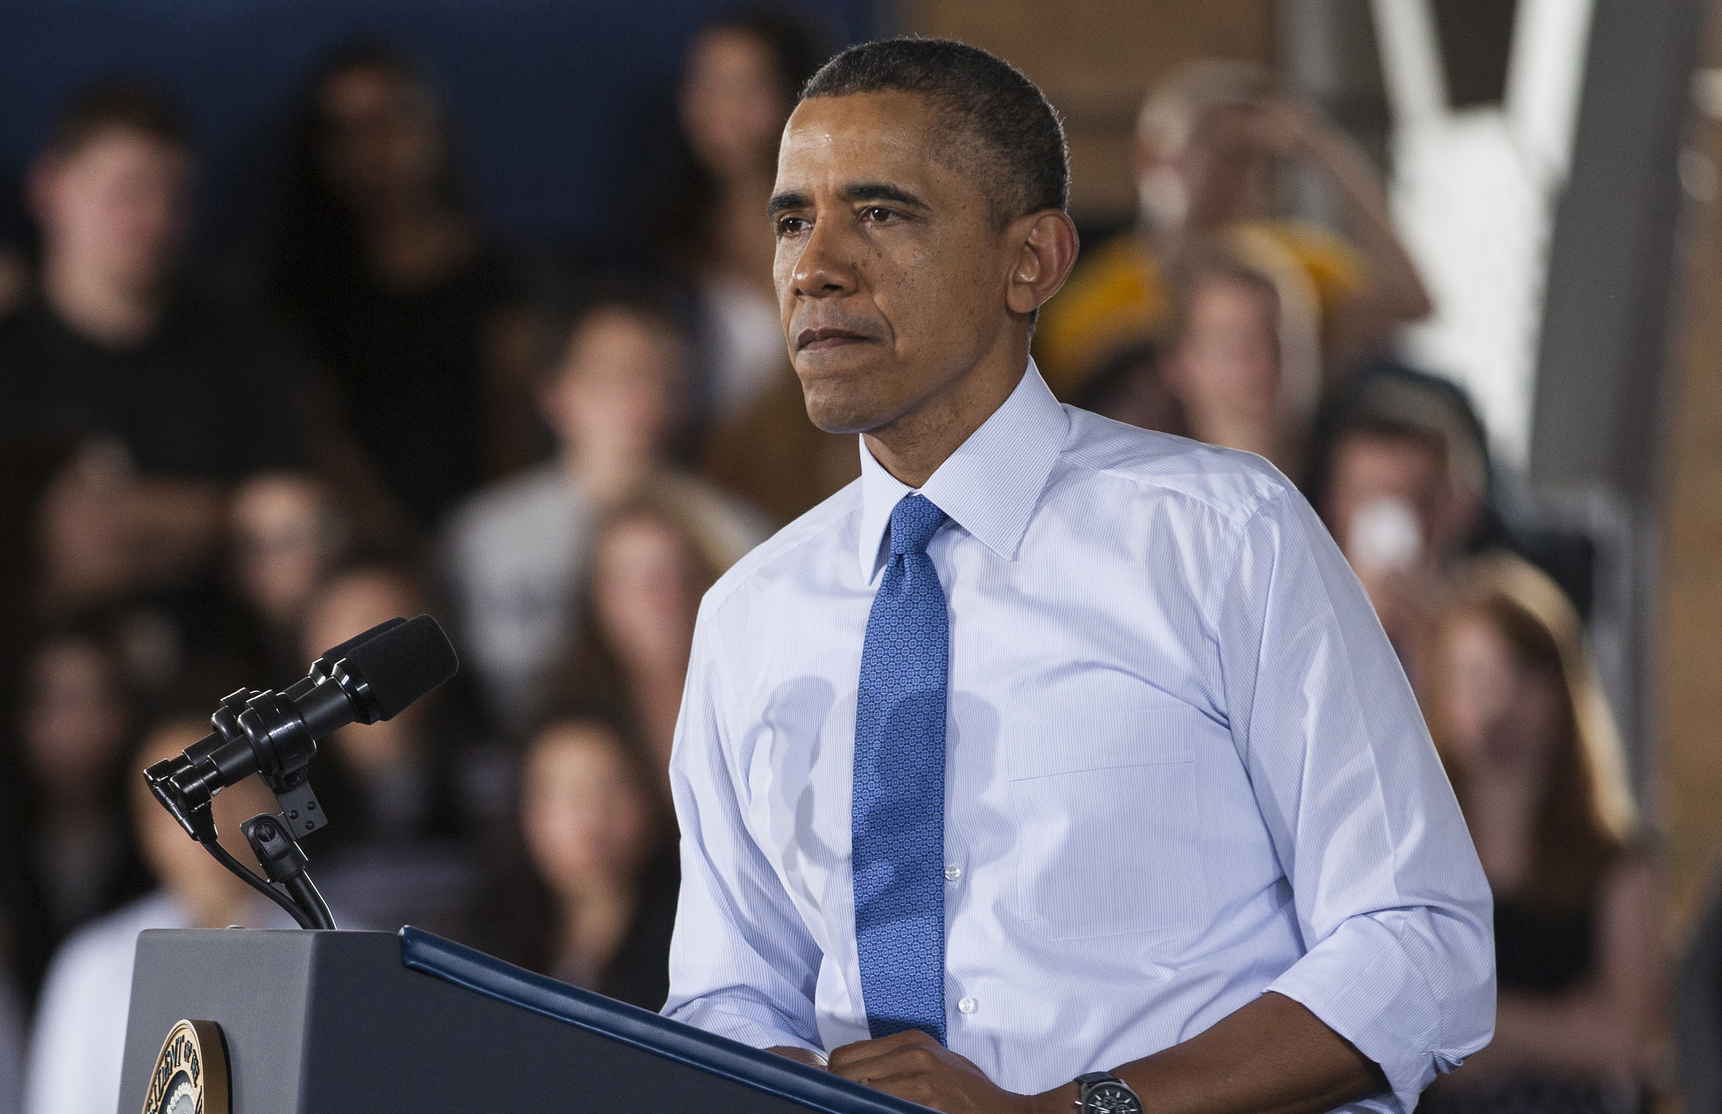 Report Says Obama Should “Go Big” on Immigration Action